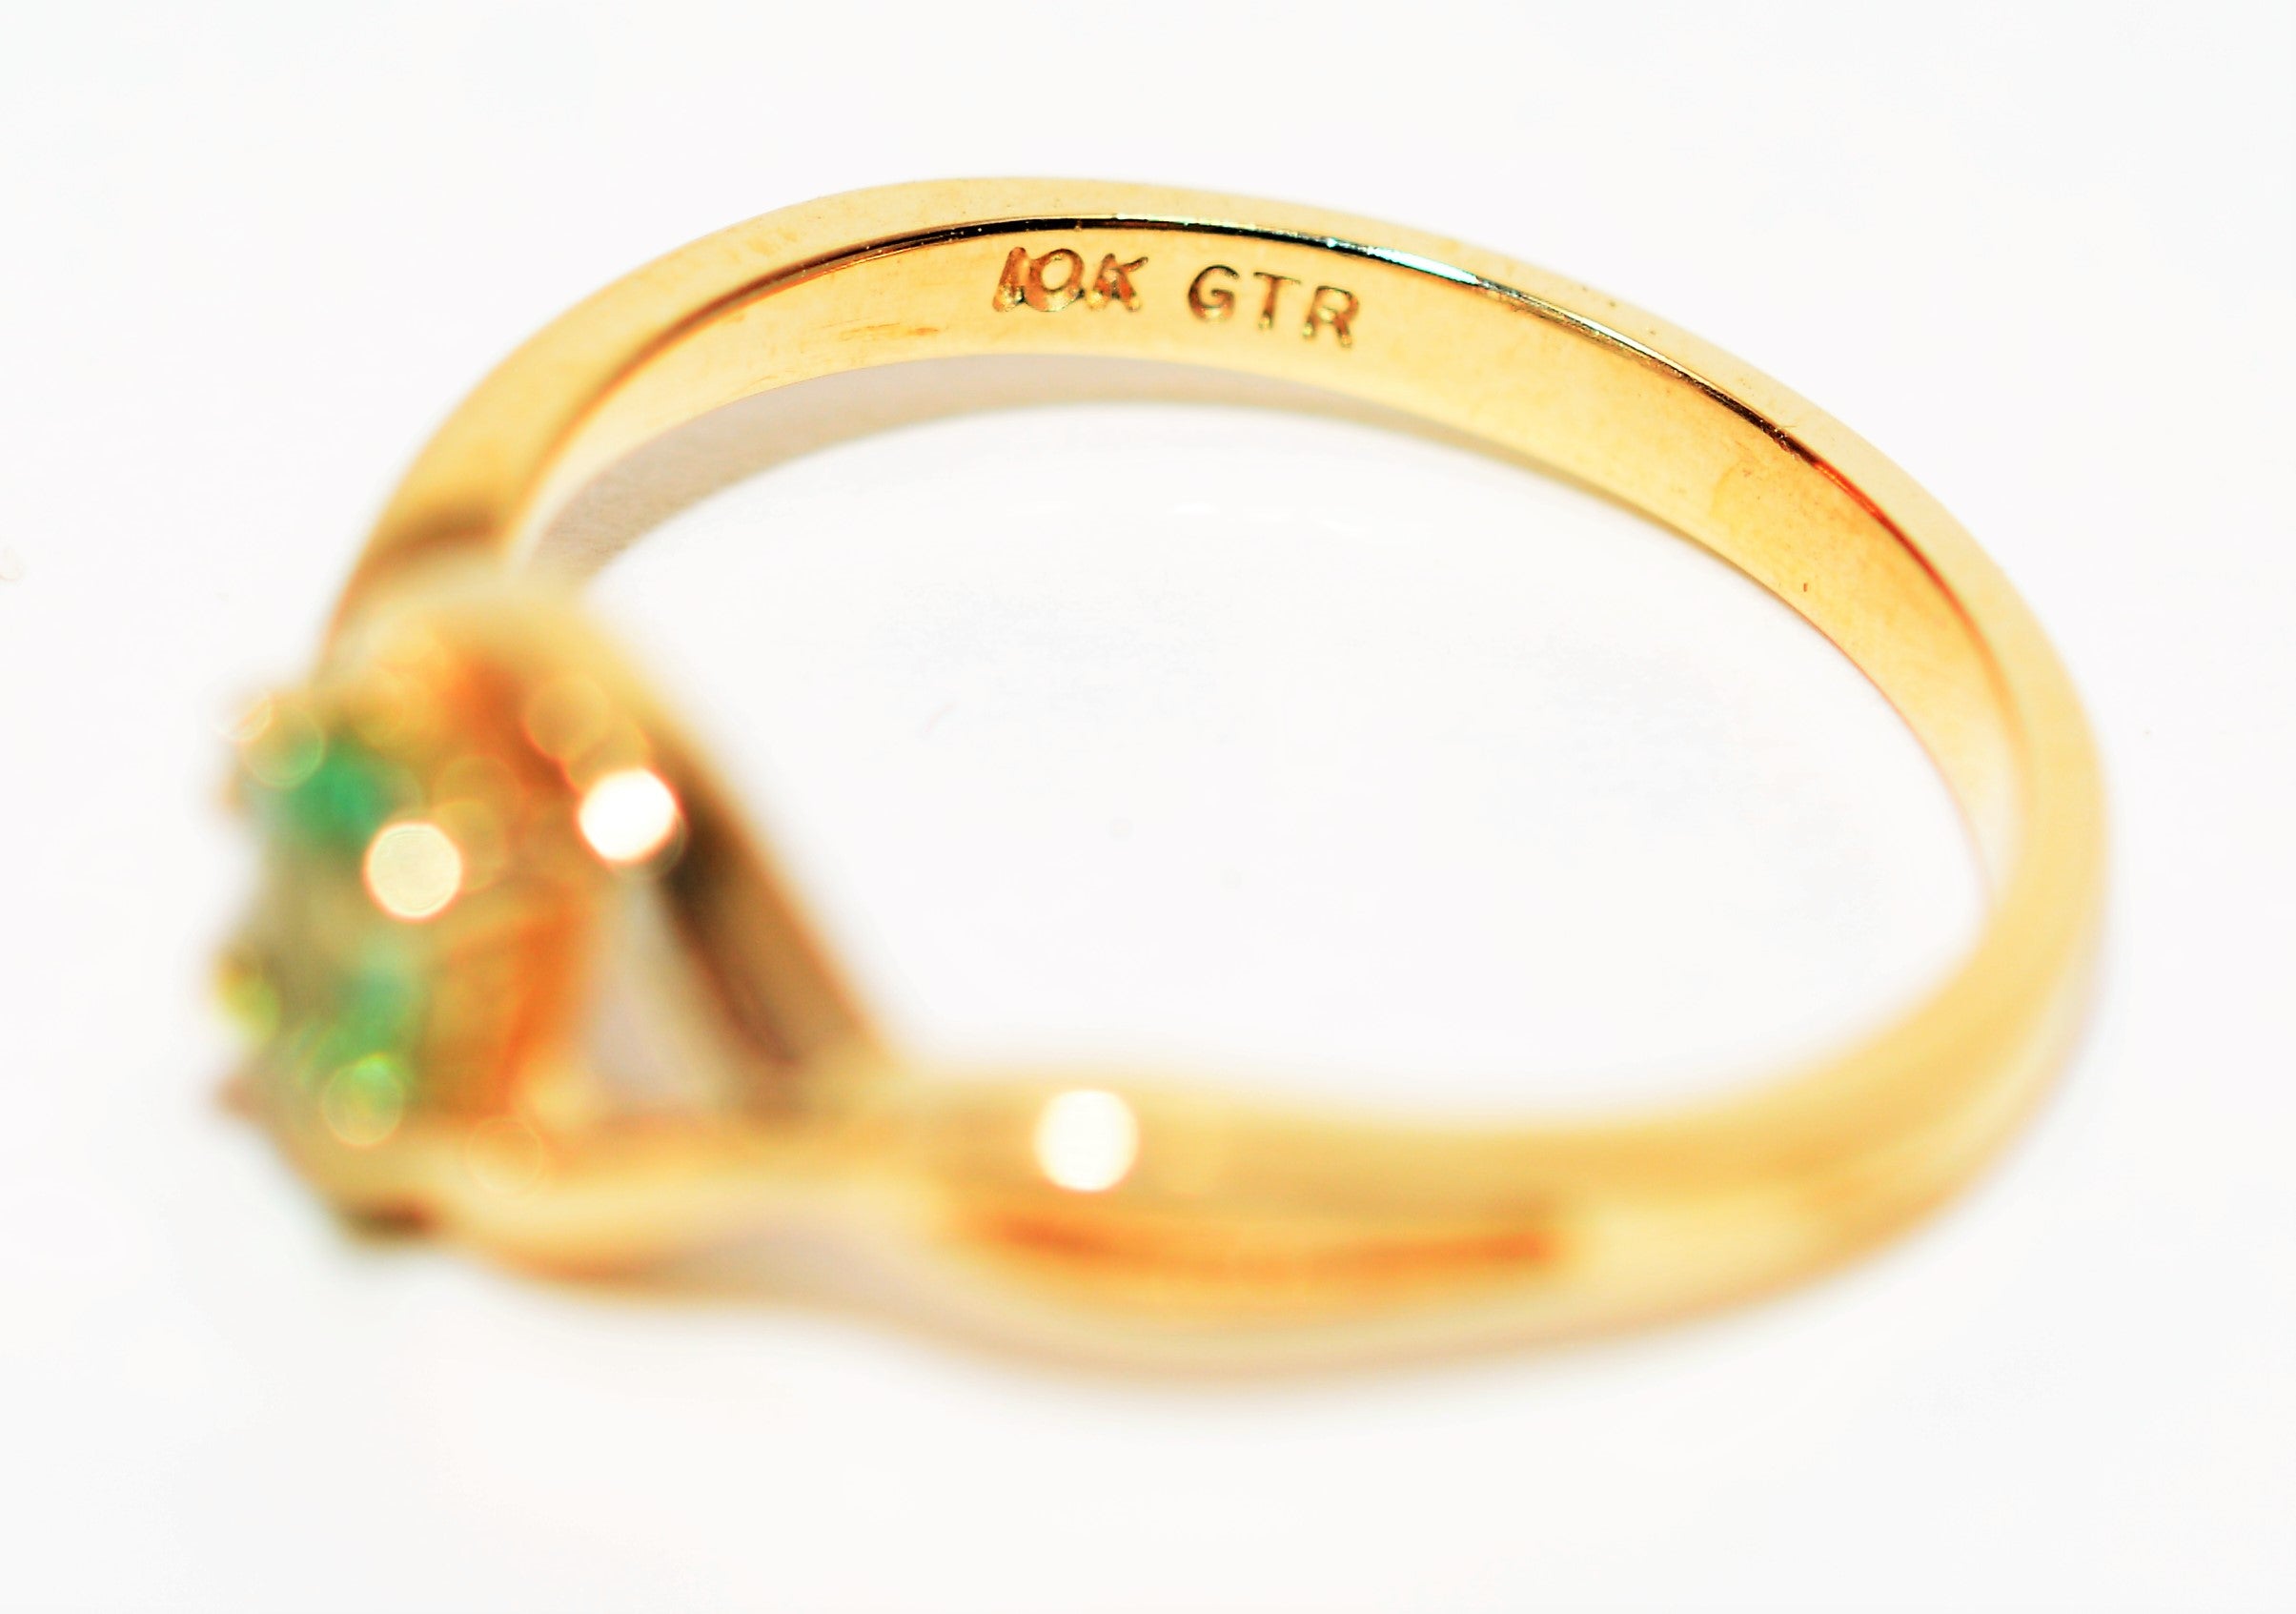 Natural Paraiba Tourmaline & Diamond Ring 10K Solid Gold .27tcw Fine Gemstone Birthstone Ring Vintage  Fine Estate Jewelry